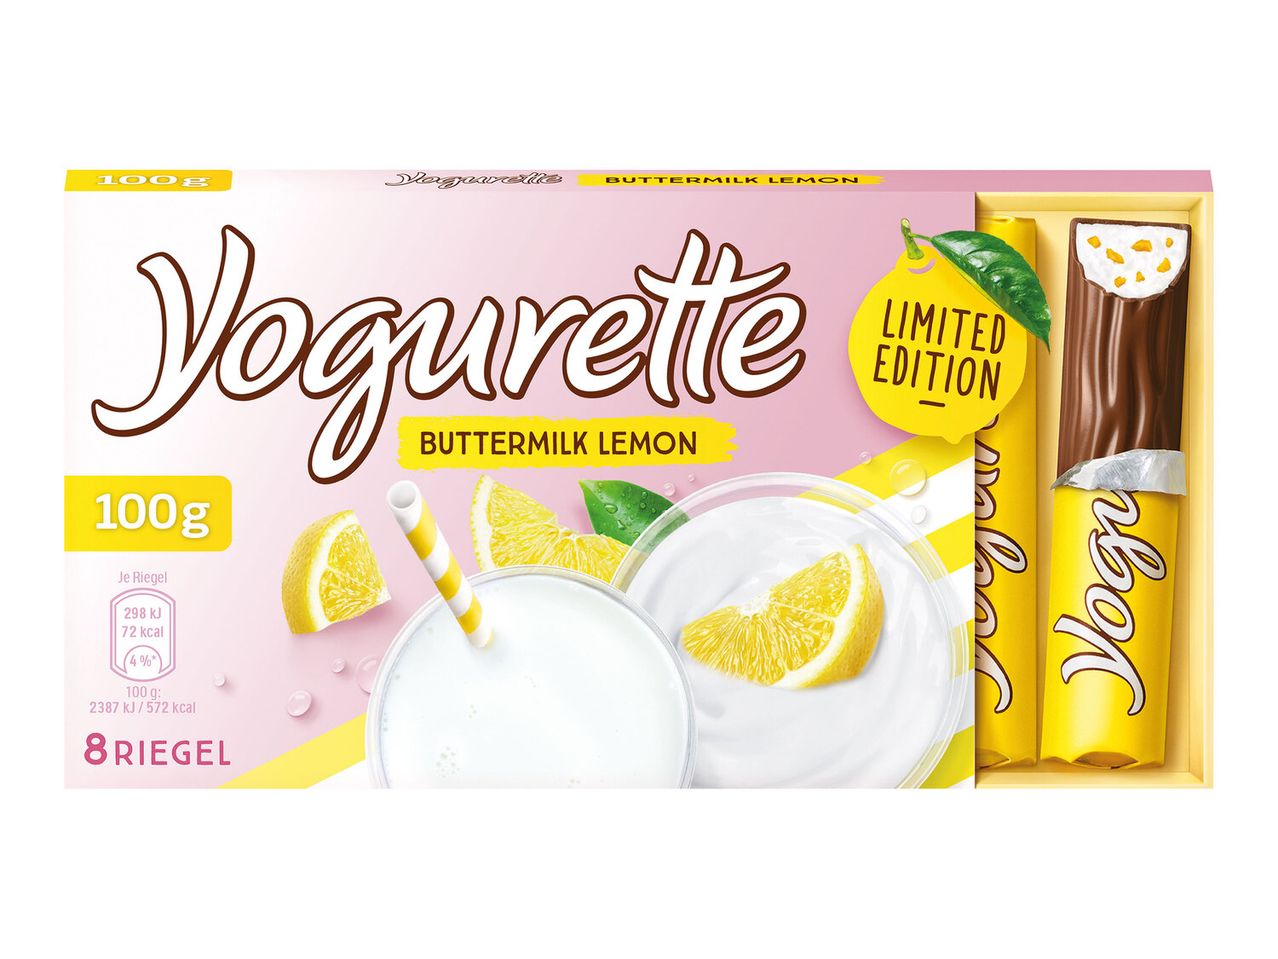 Buttermilk Lemon Yogurette